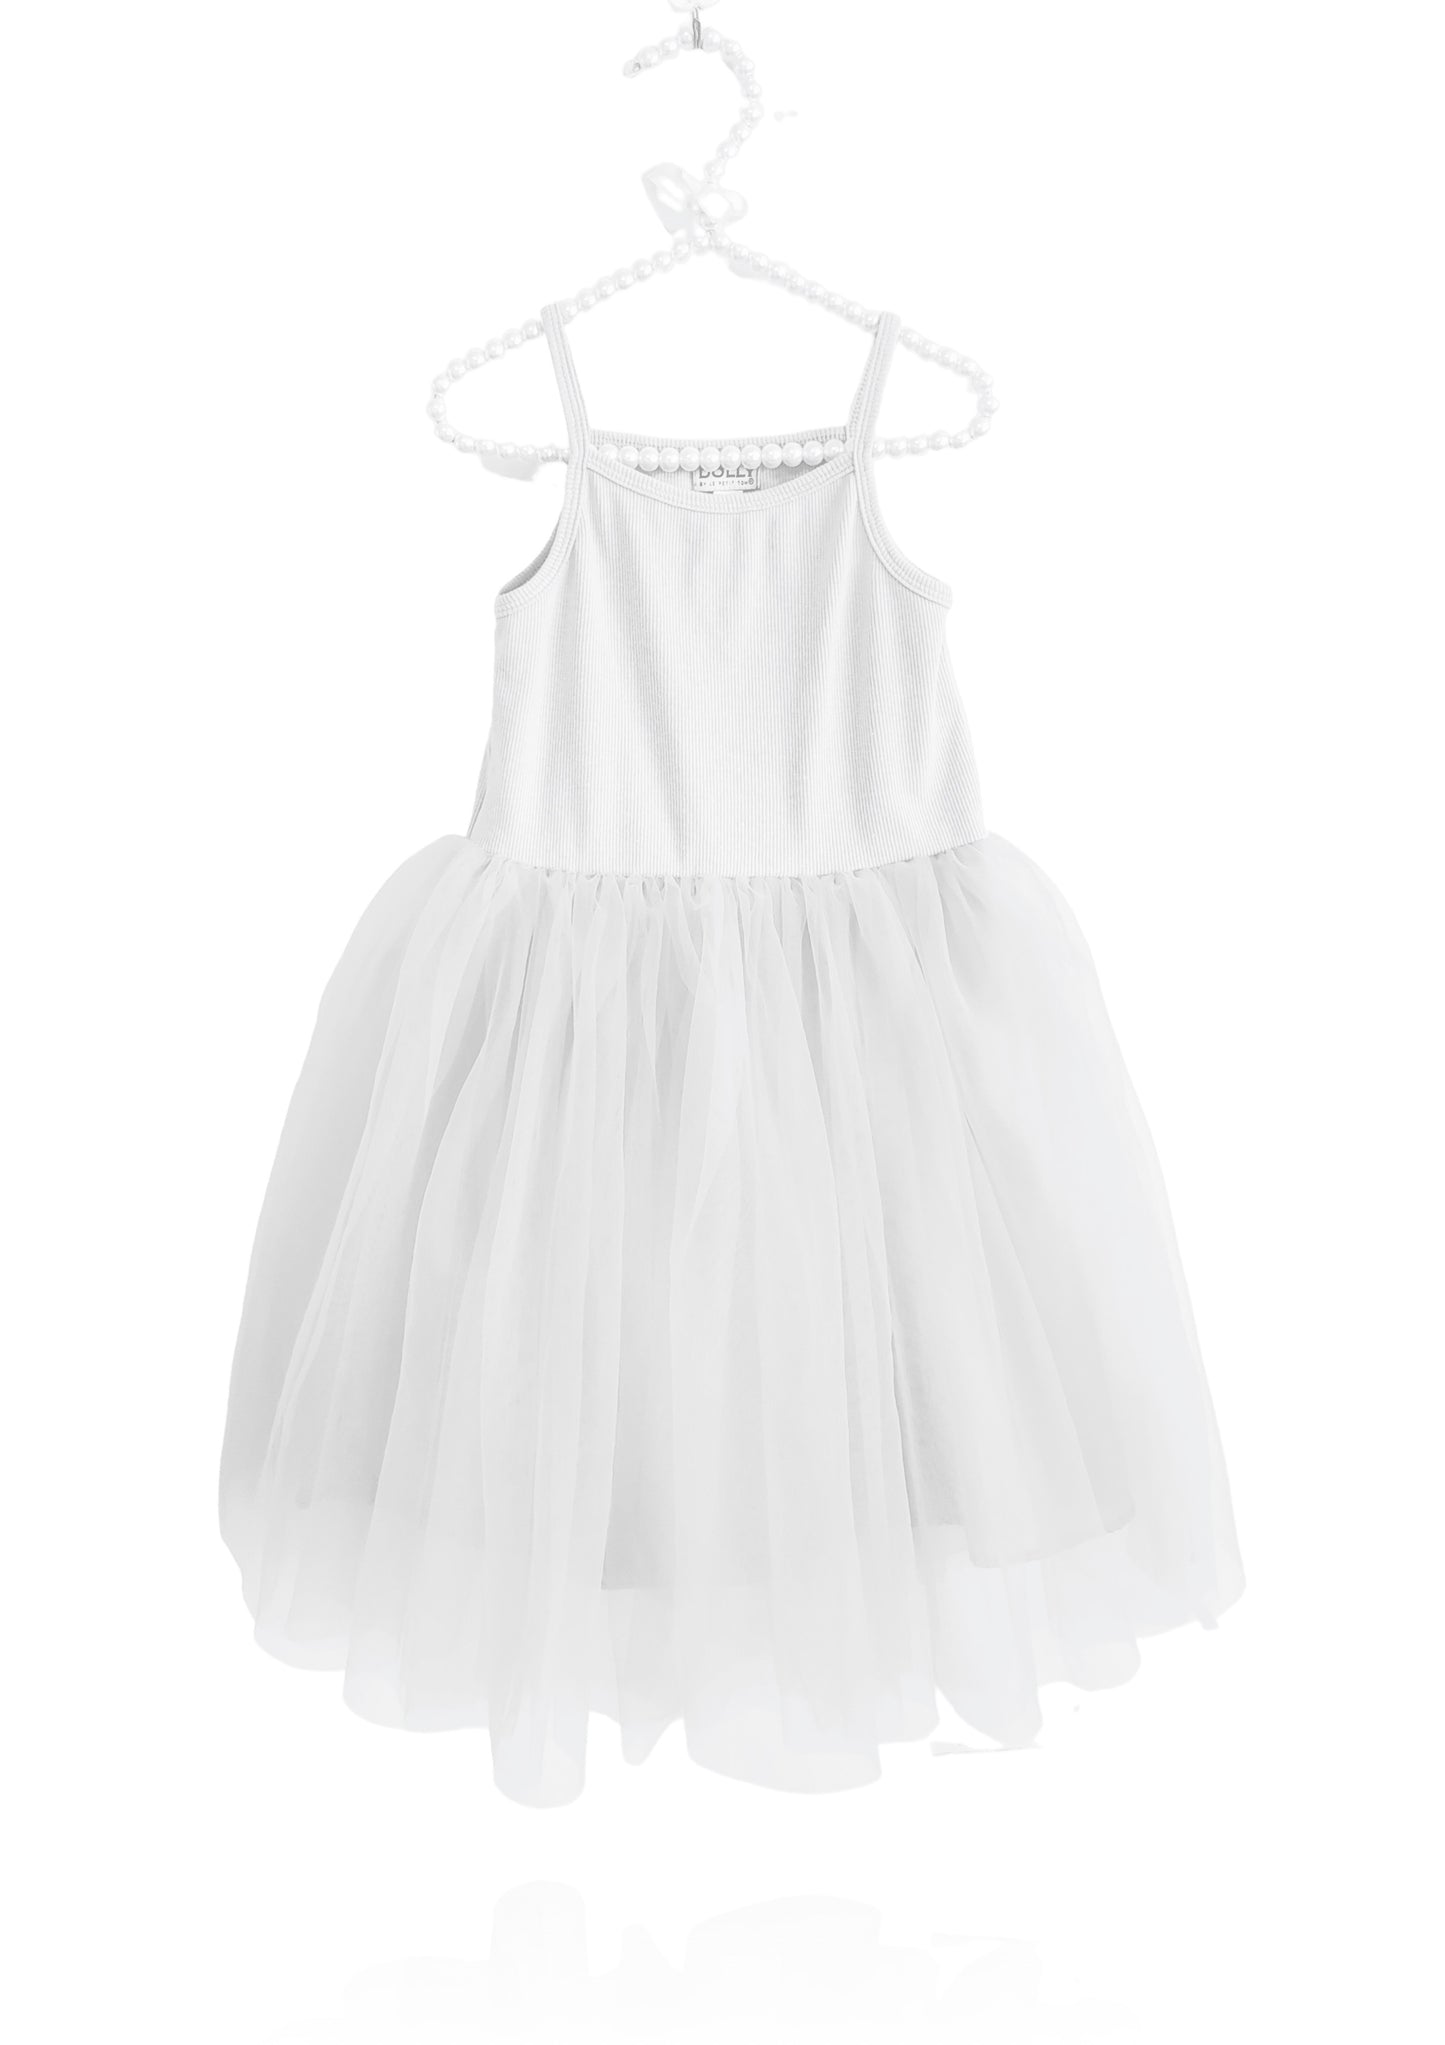 DOLLY by Le Petit Tom ® RIB COTTON TUTU DRESS white